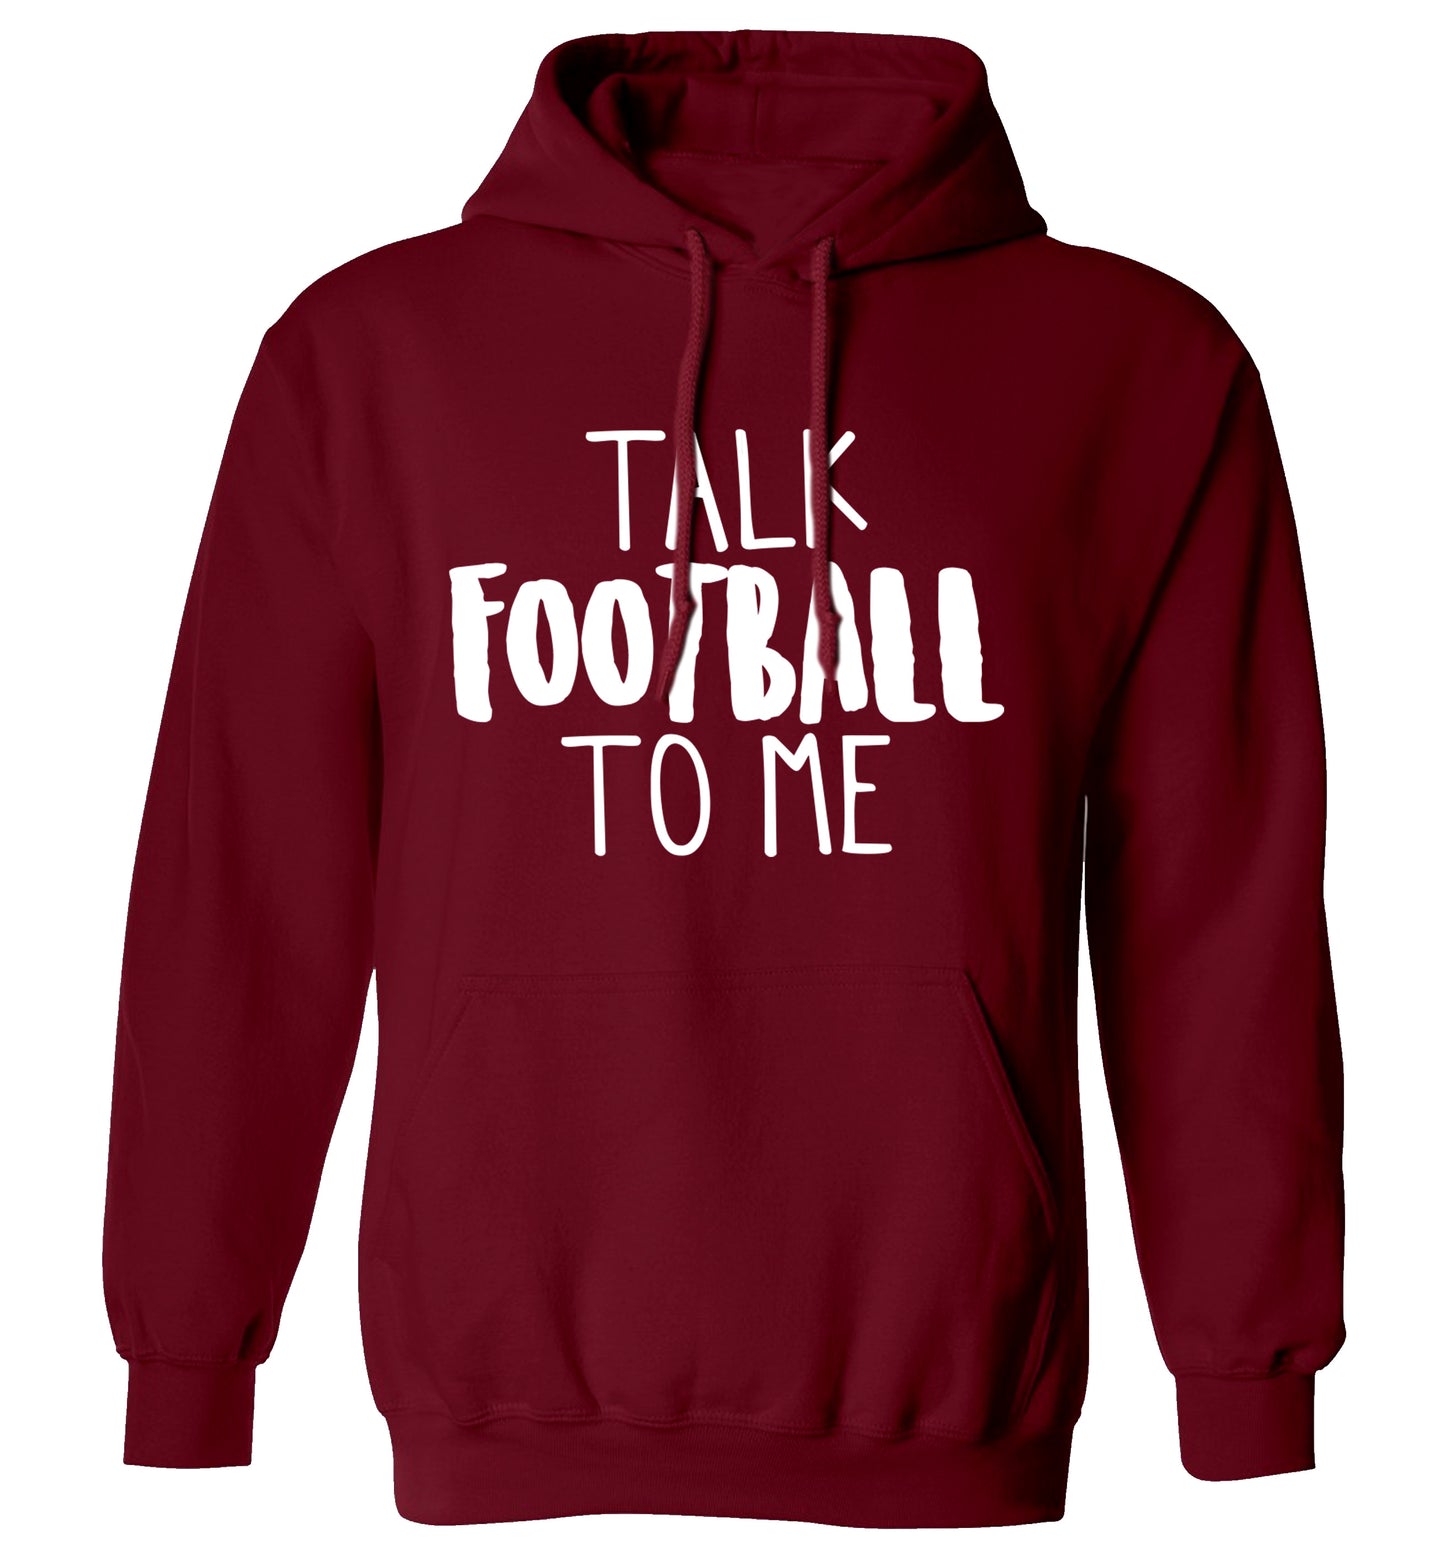 Talk football to me adults unisexmaroon hoodie 2XL